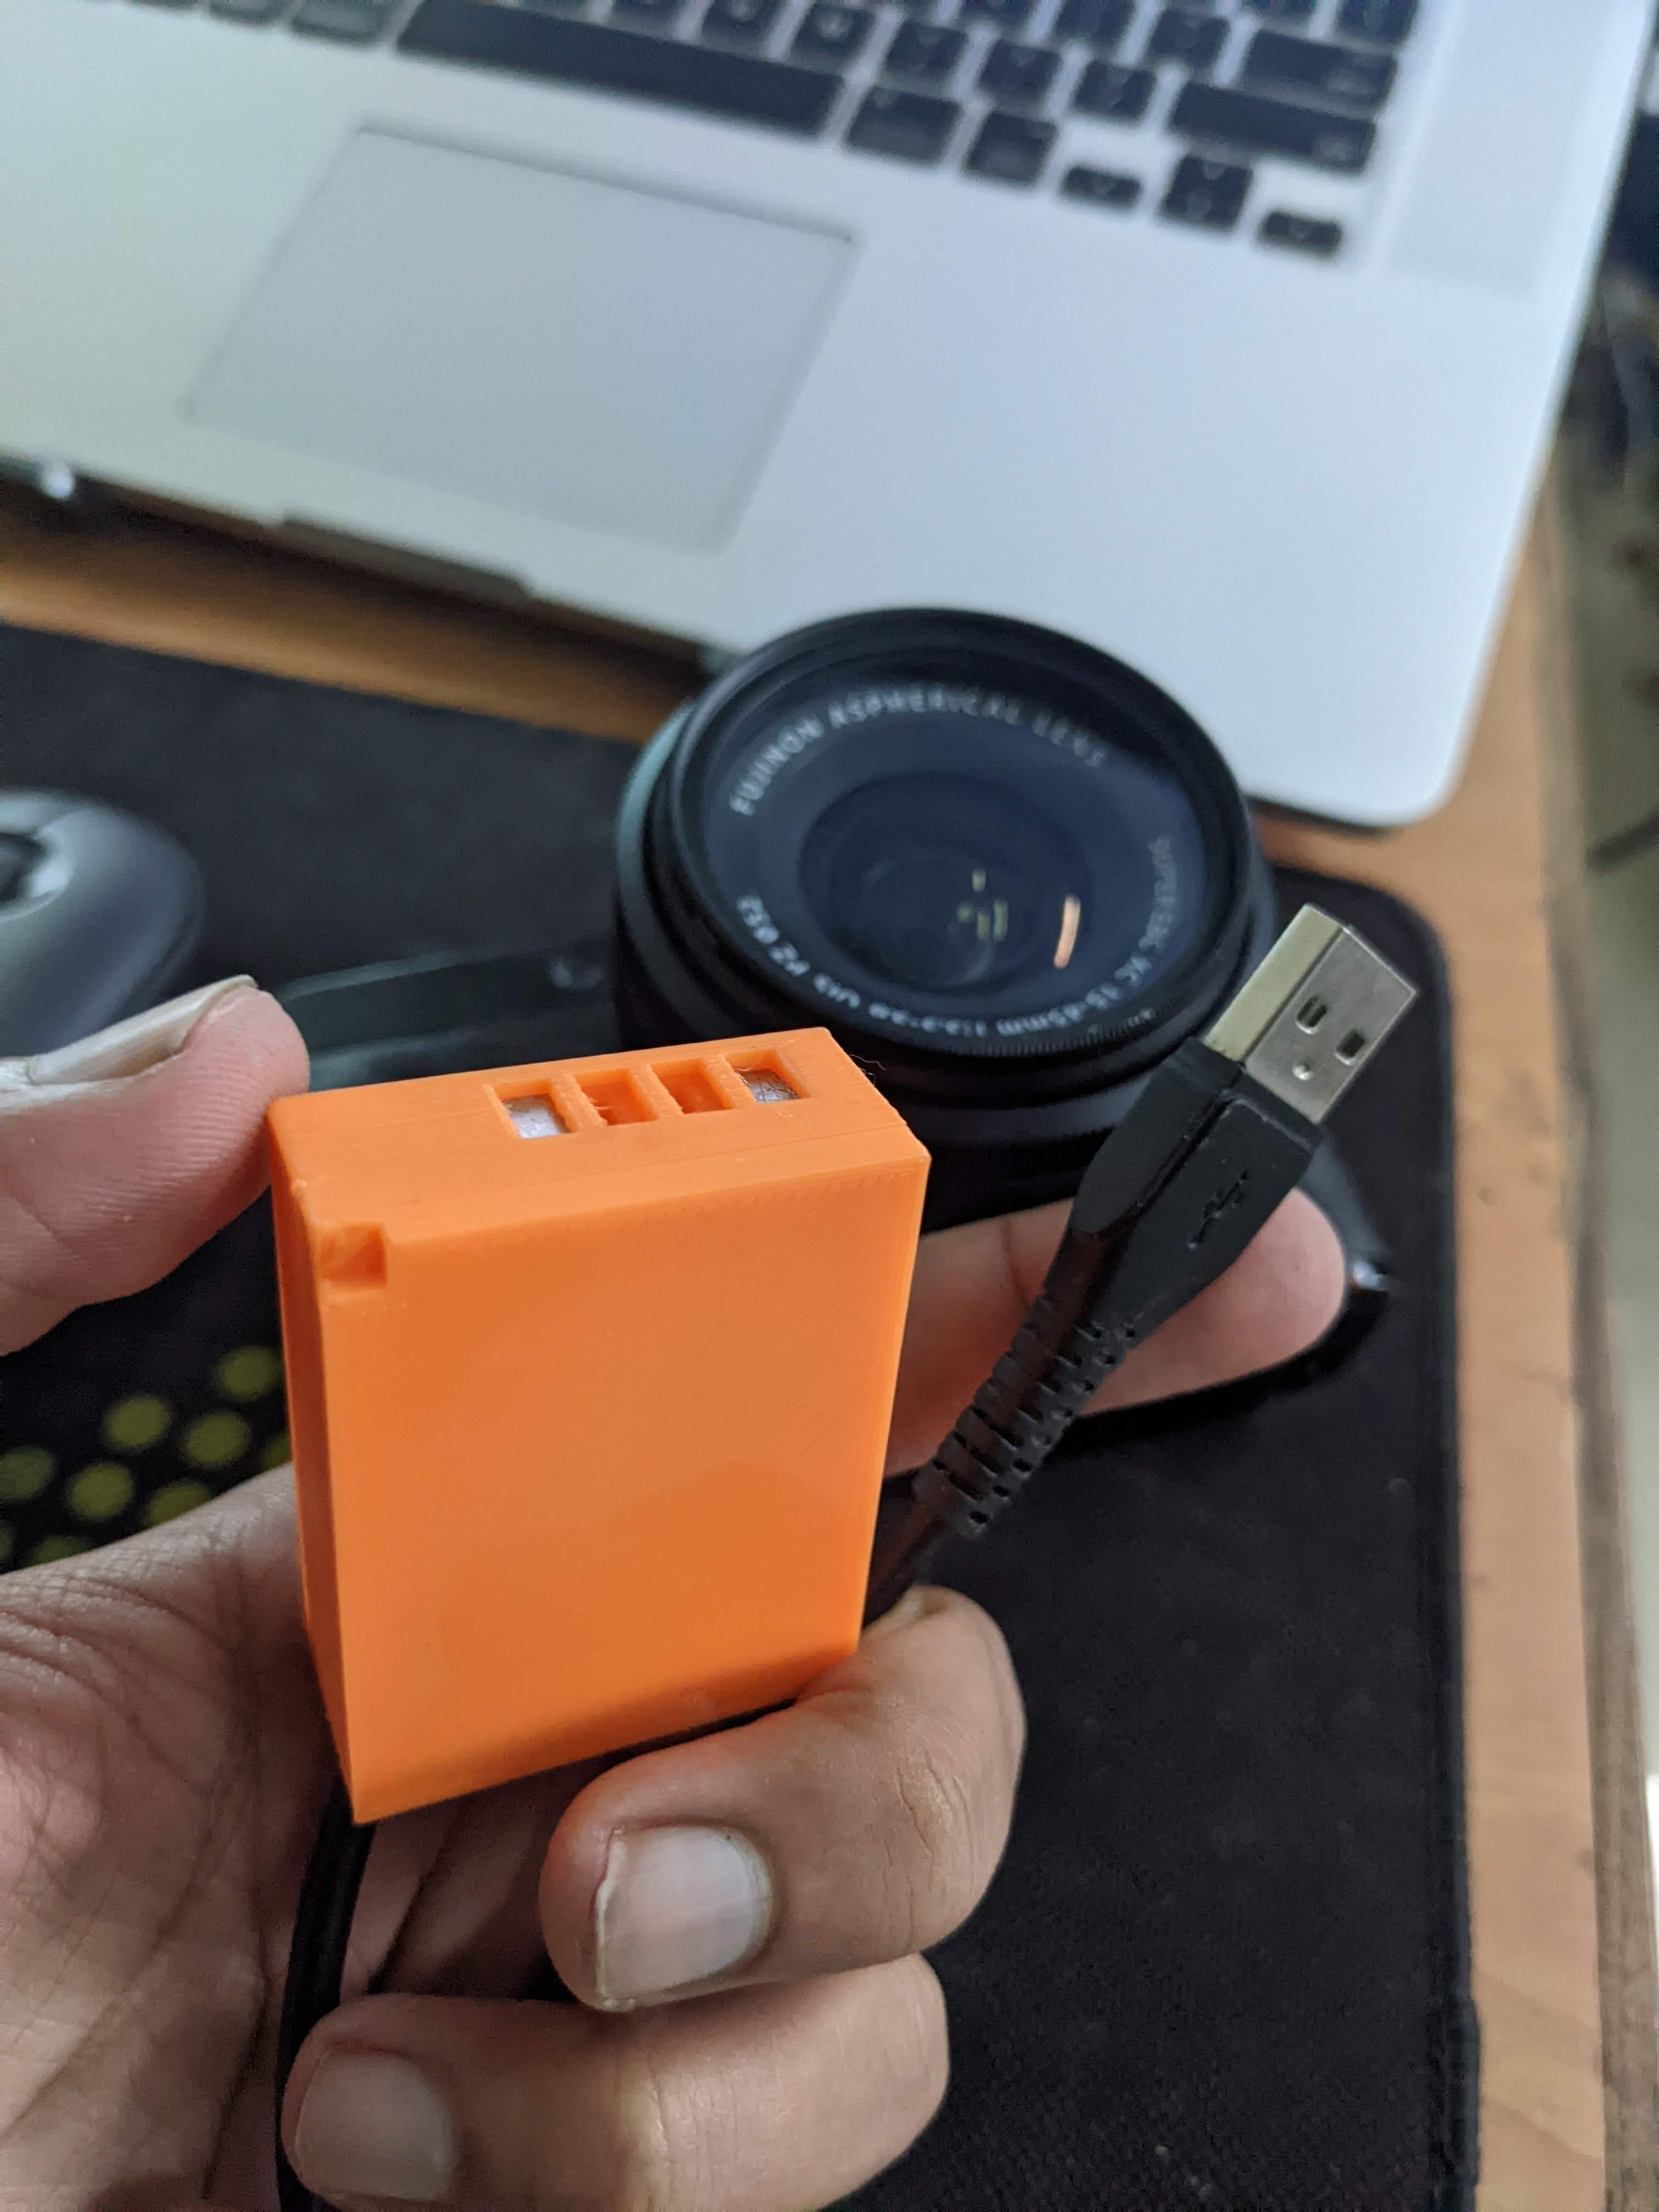 Camera Battery